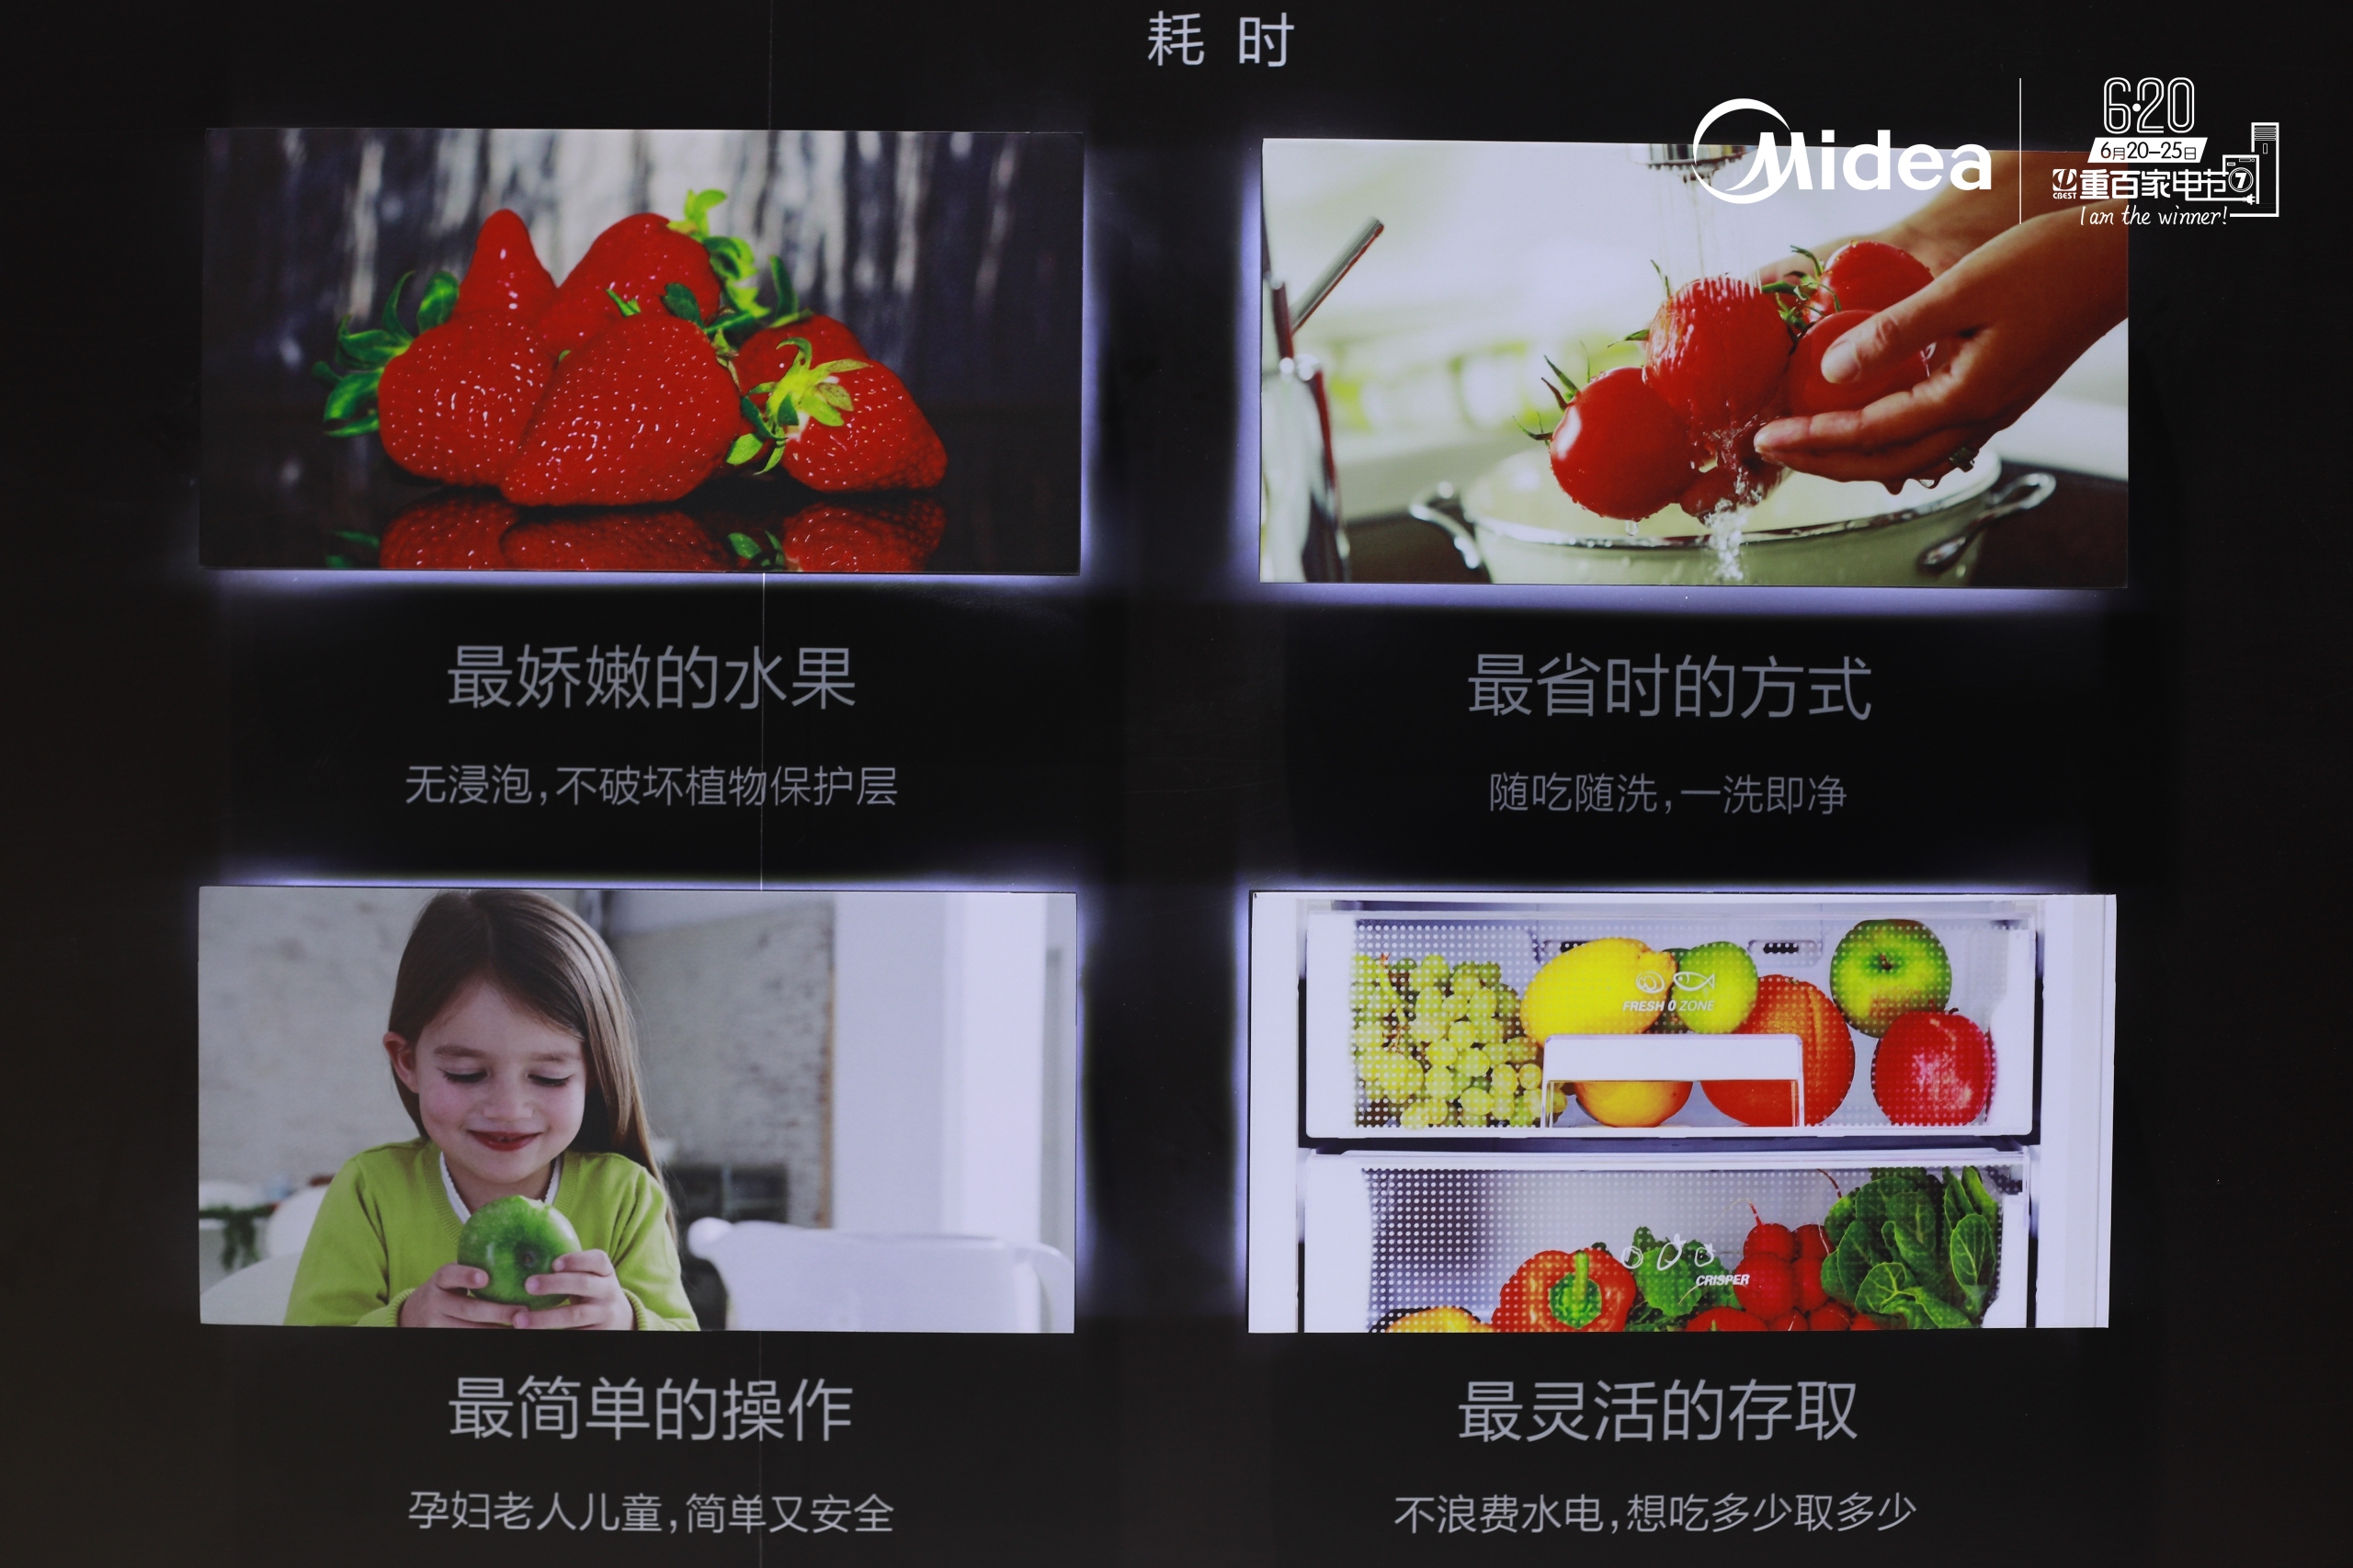 XSX冰箱宣传片公布 官方正在举办抽奖送冰箱活动-轻之国度-专注分享的NACG社群